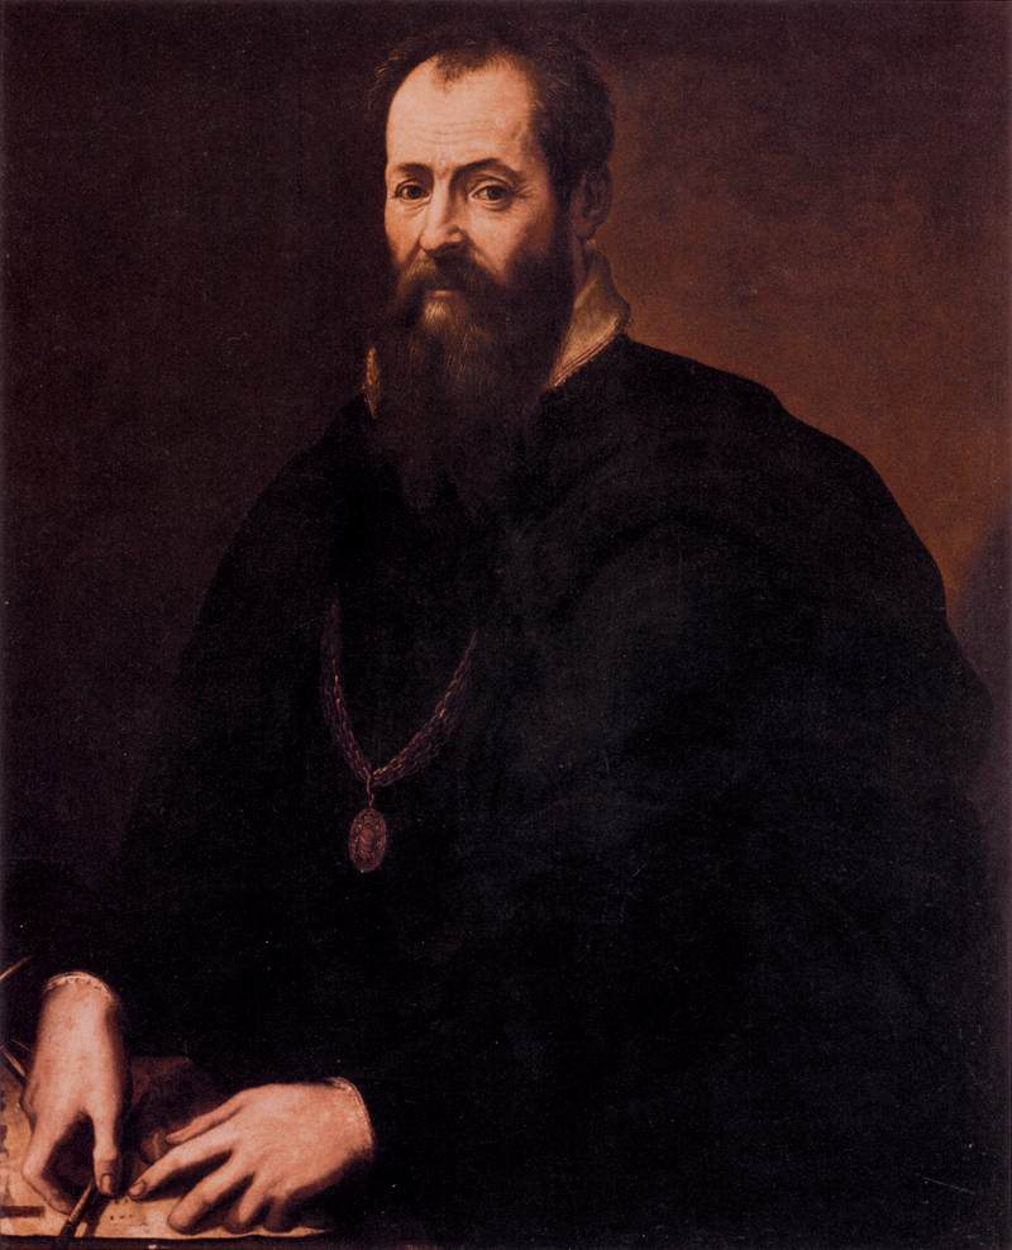 Giorgio Vasari - July 30, 1511 - June 27, 1574